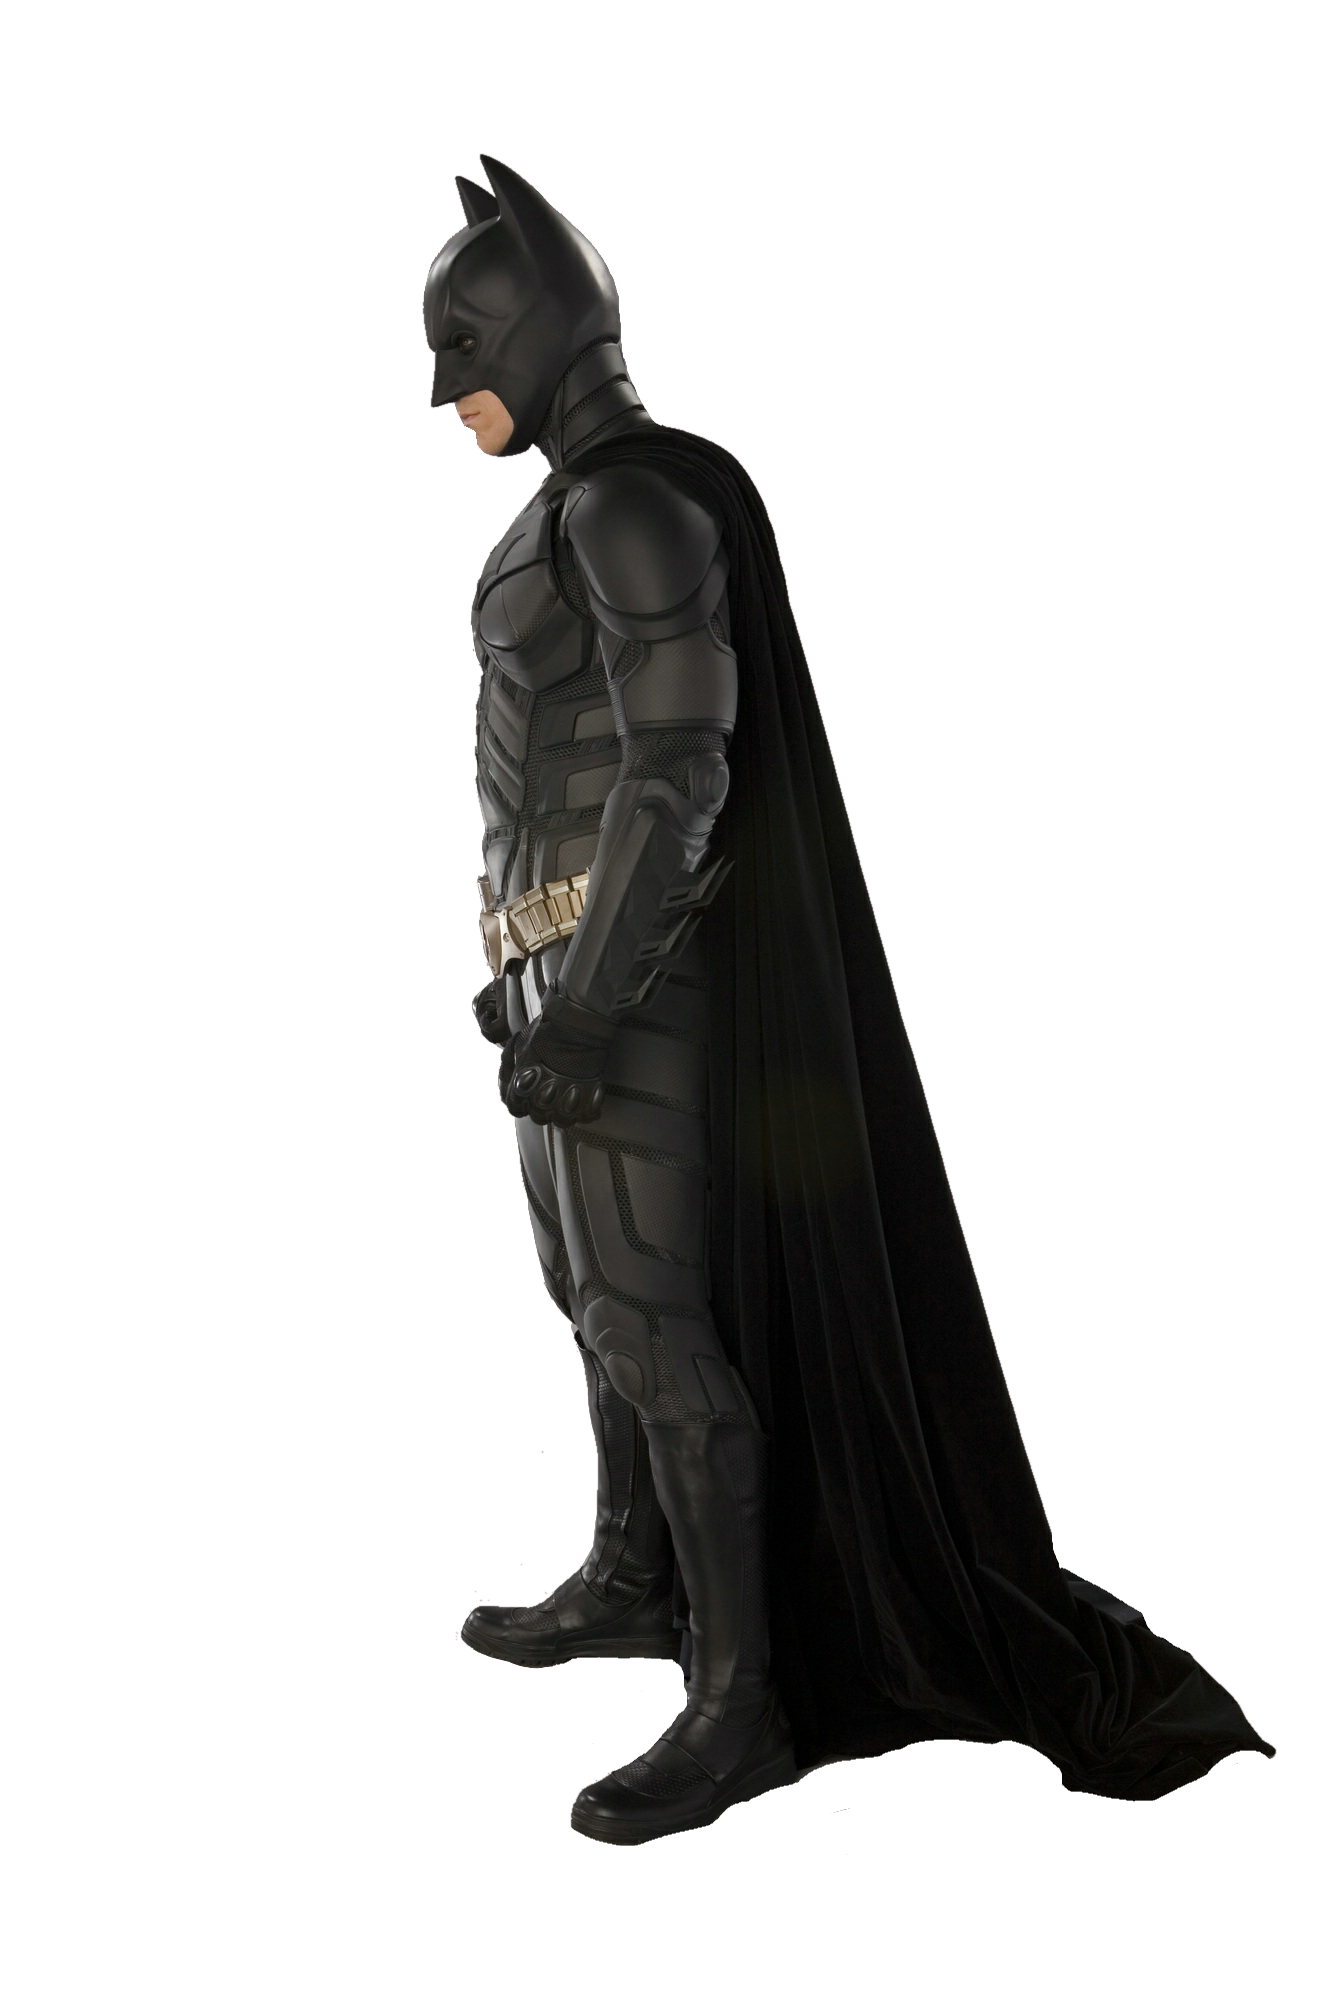 Dark Knight Batman PNG Background Image